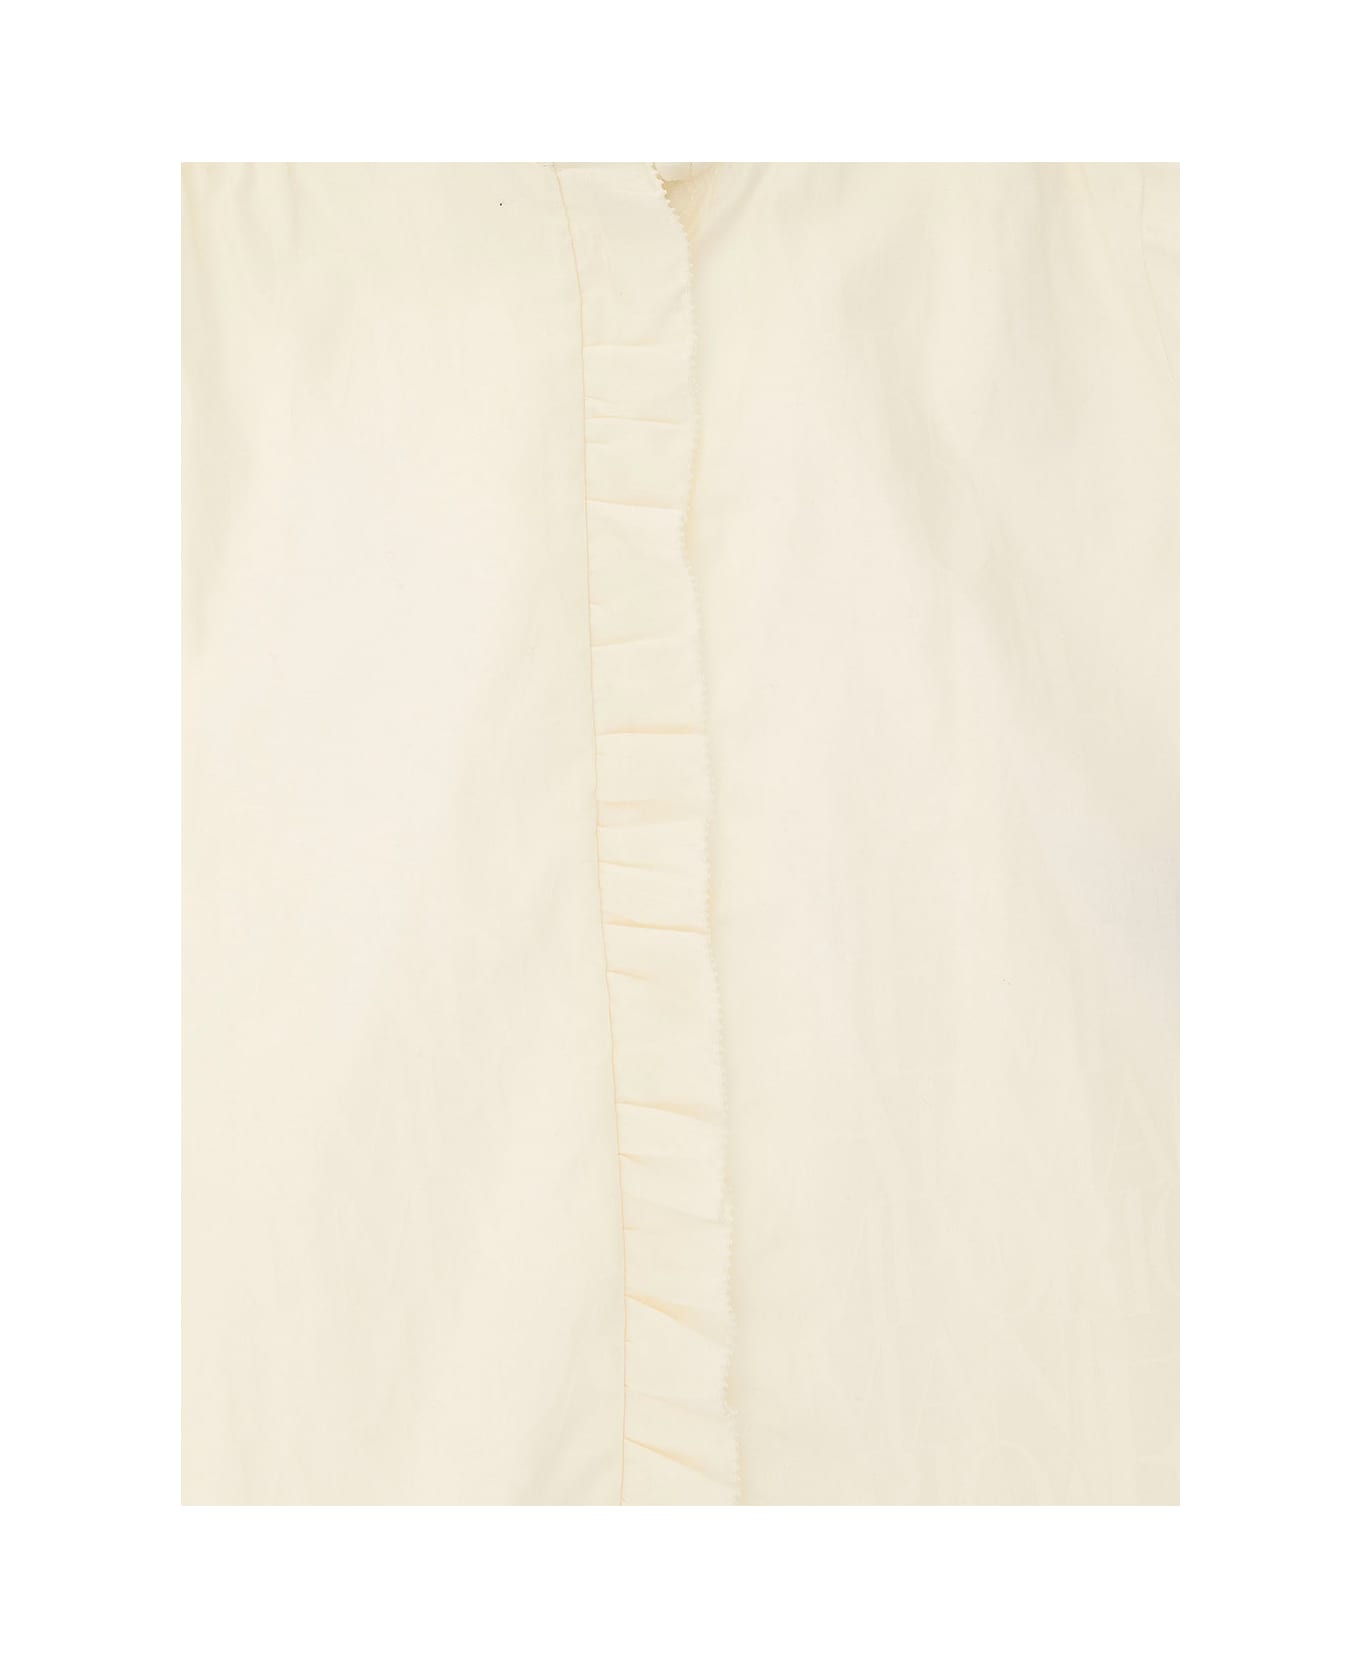 Emporio Armani Cream White Shirt With Turn Up Collar In Cotton Girl - White